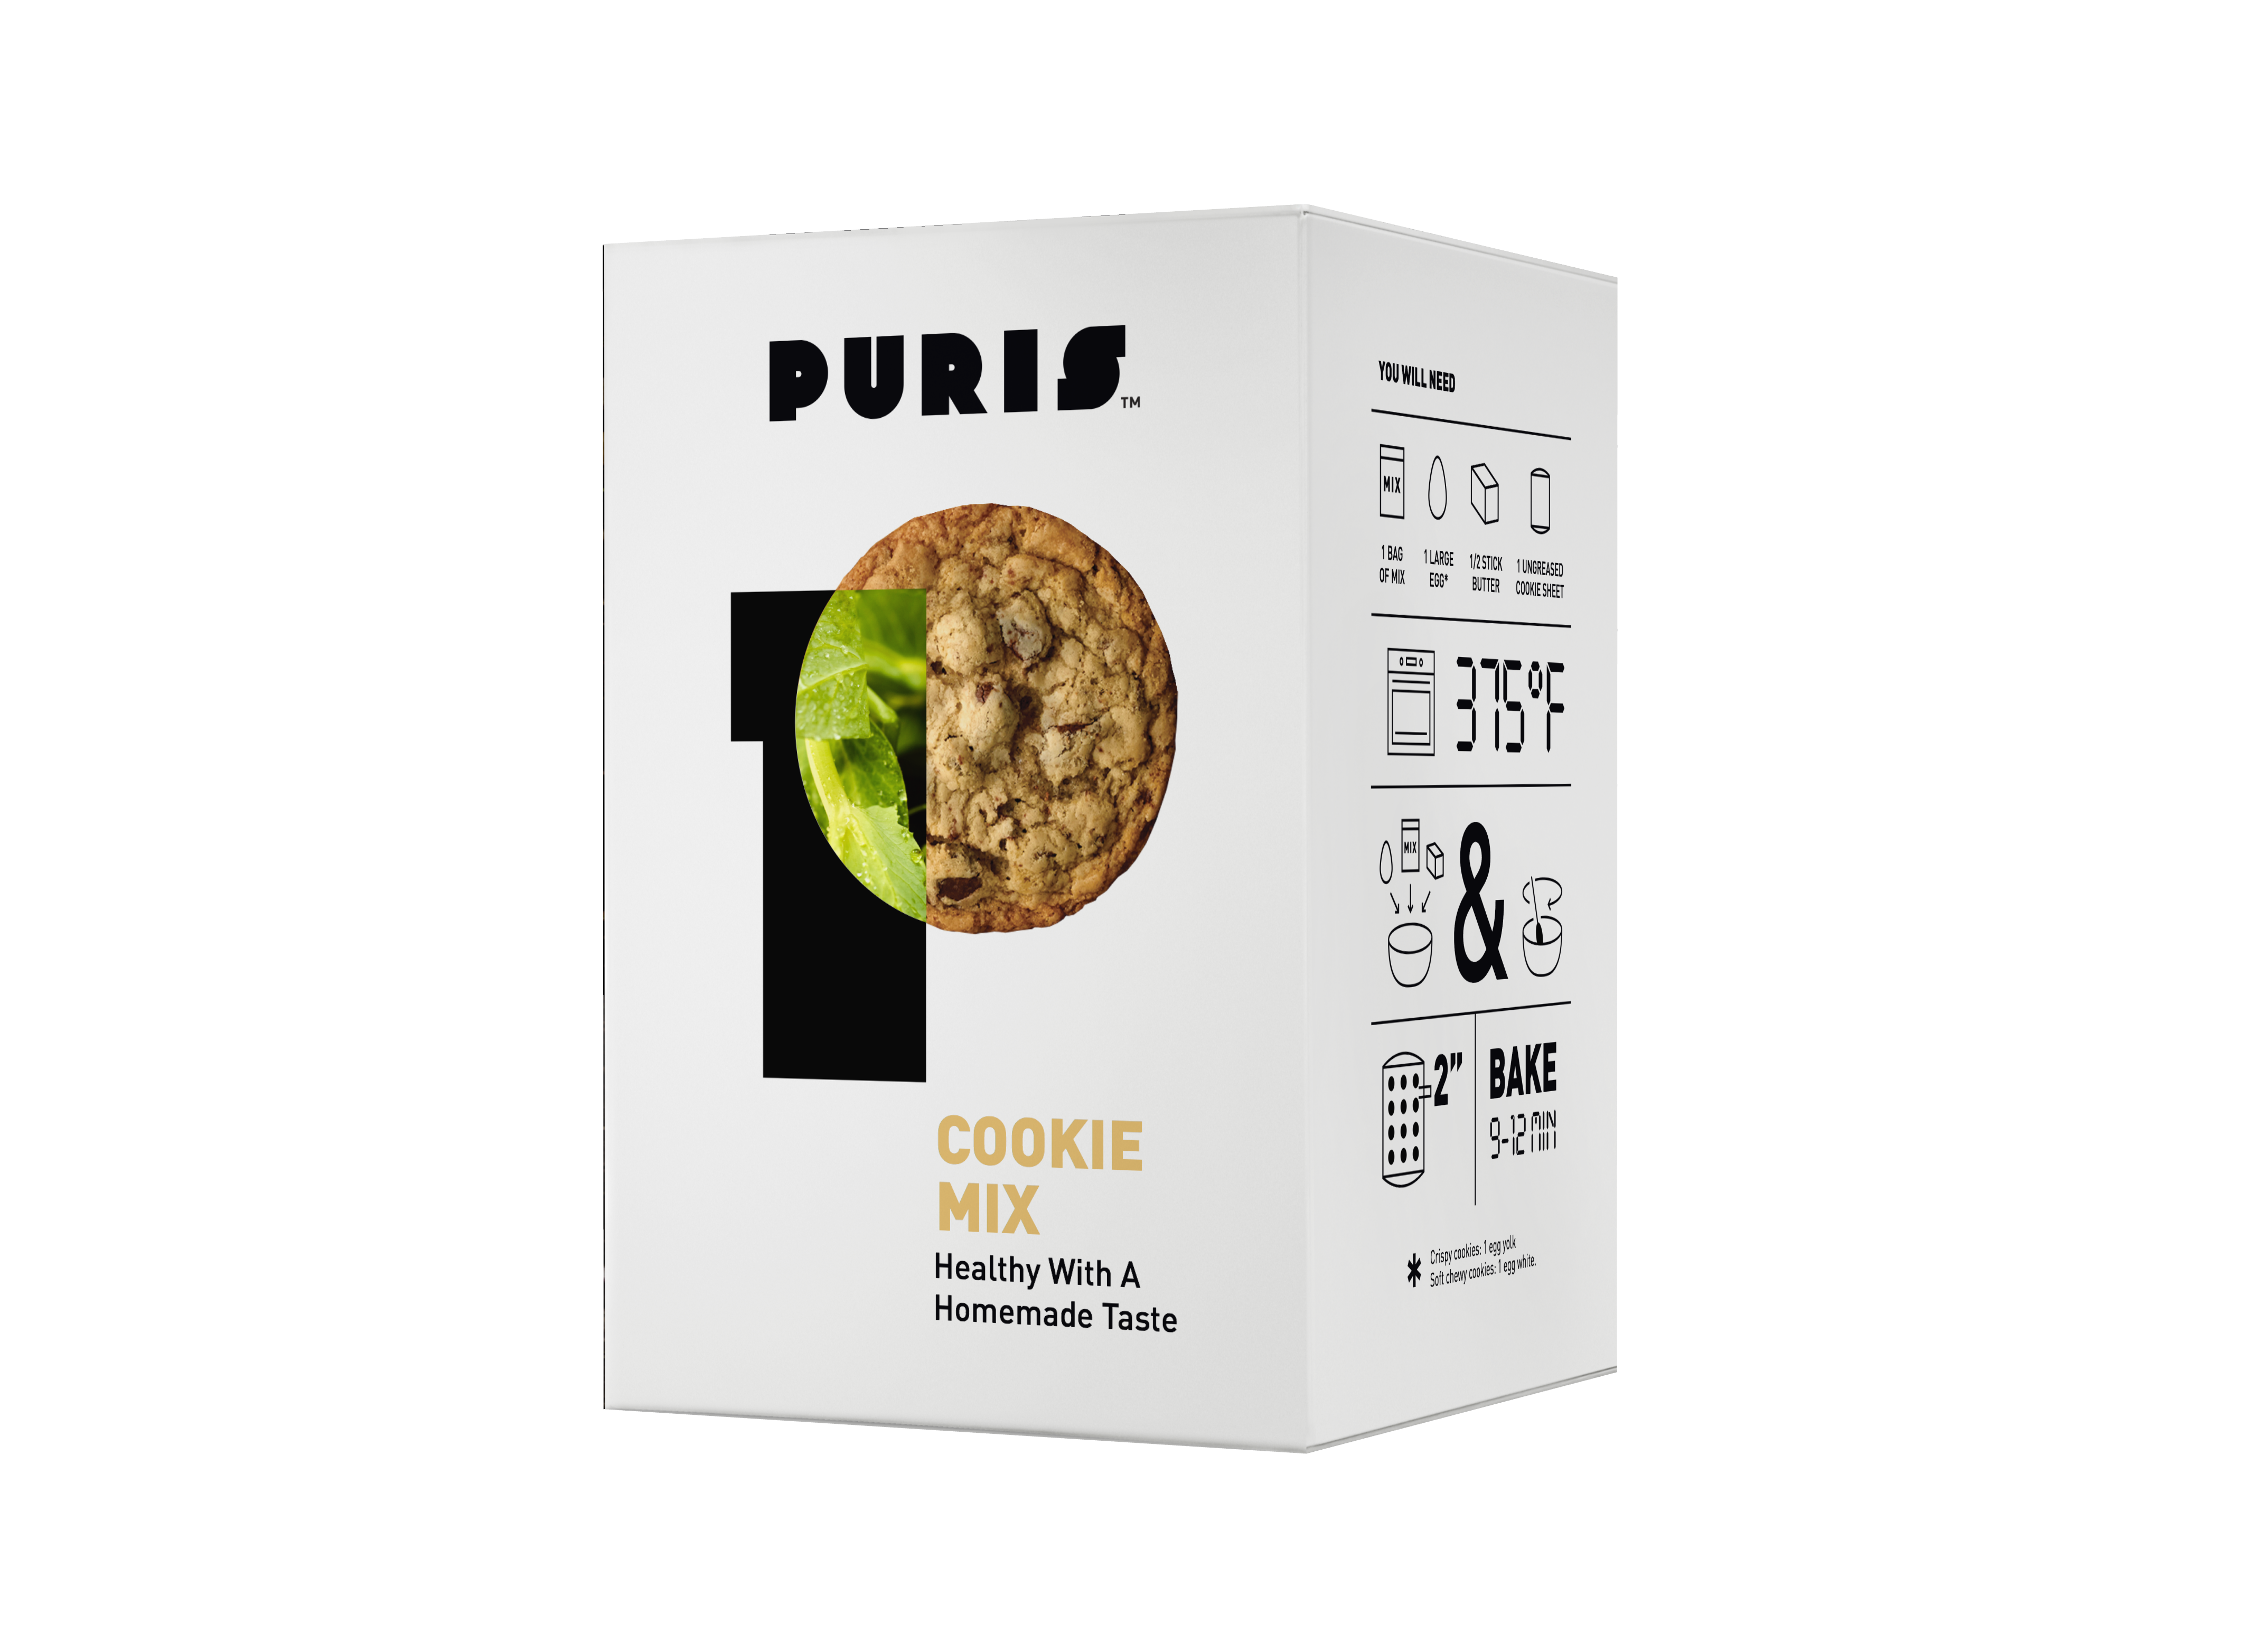 PURIS Gluten-Free Chocolate Chip Cookie Mix